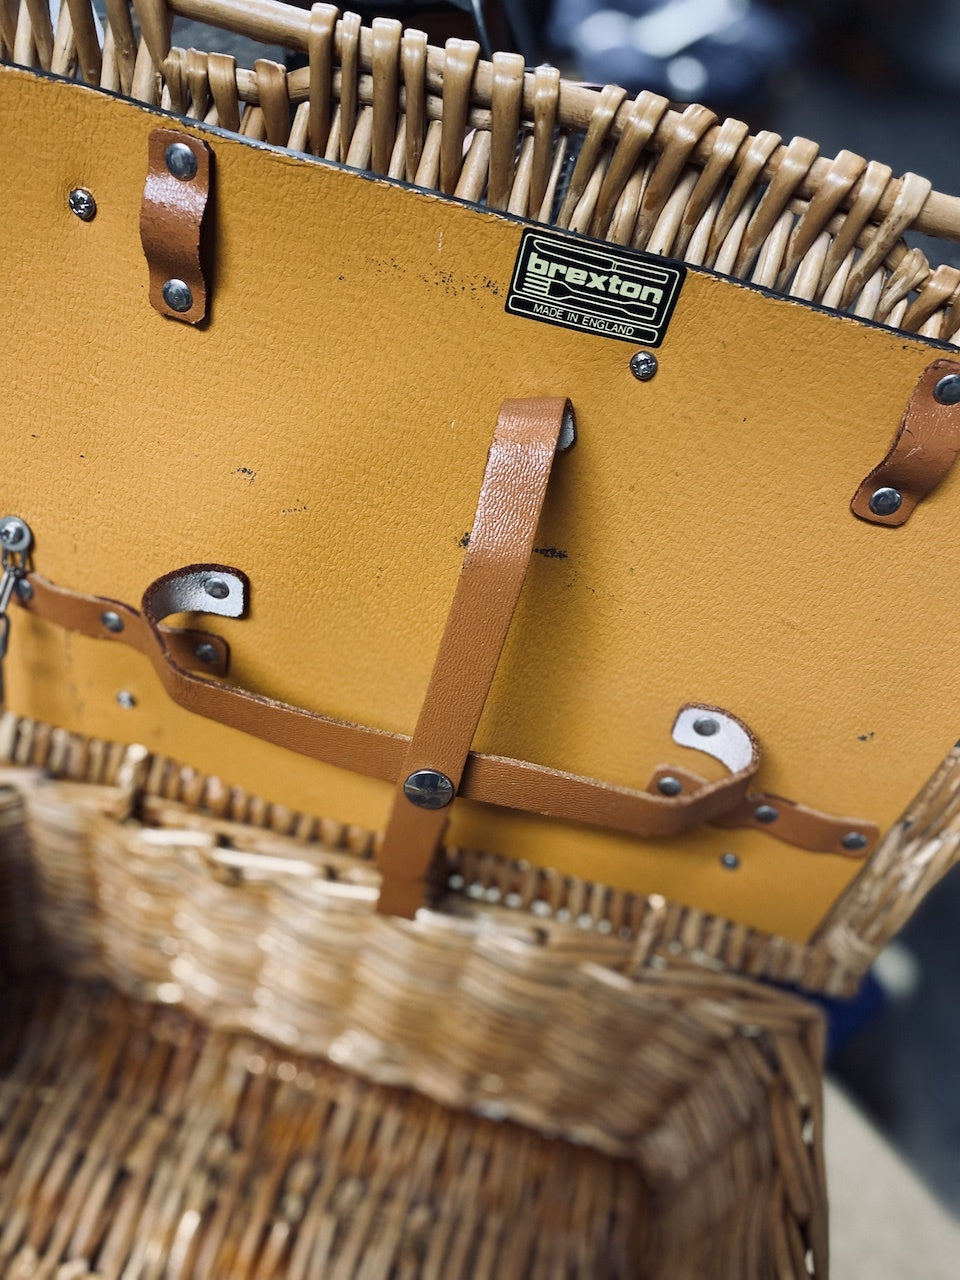 Vintage Brexton picnic basket